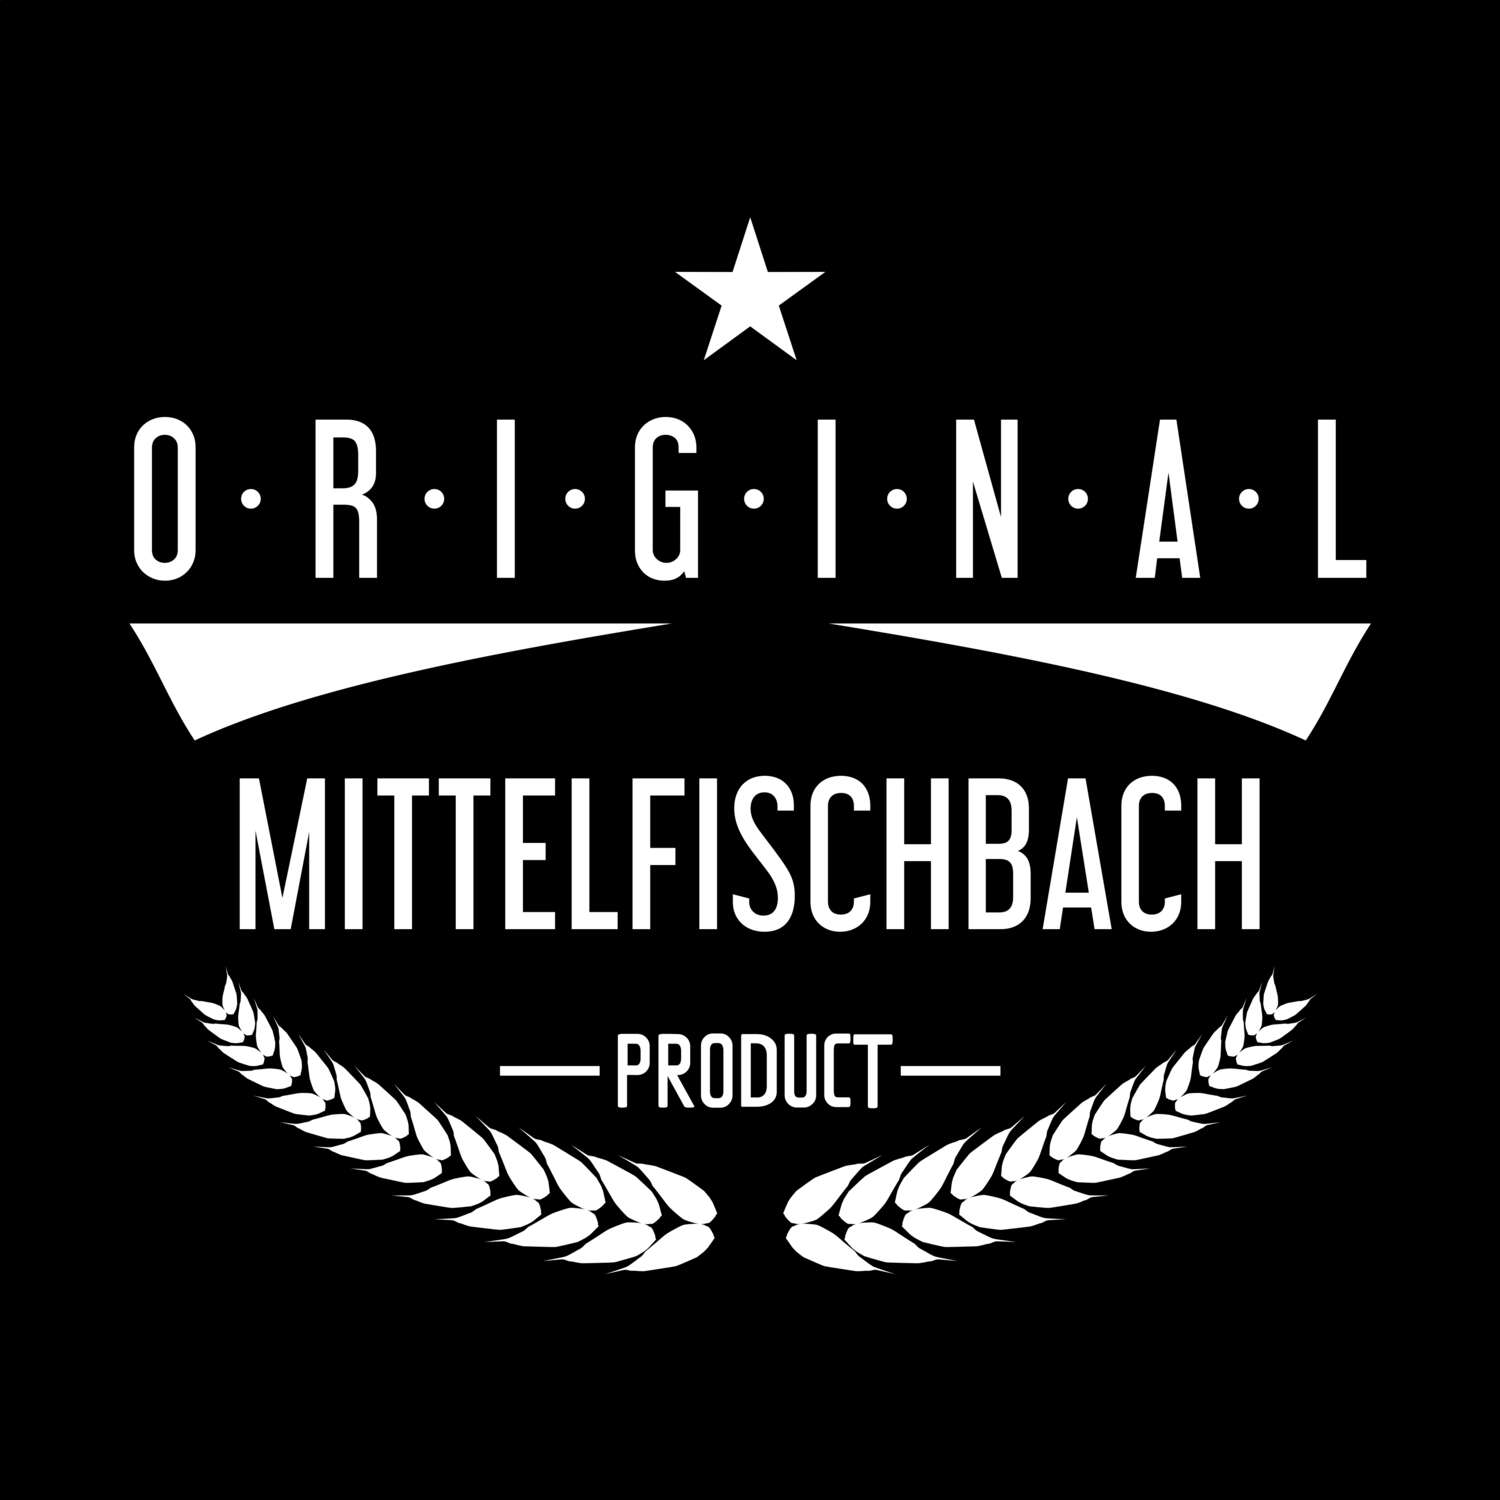 Mittelfischbach T-Shirt »Original Product«